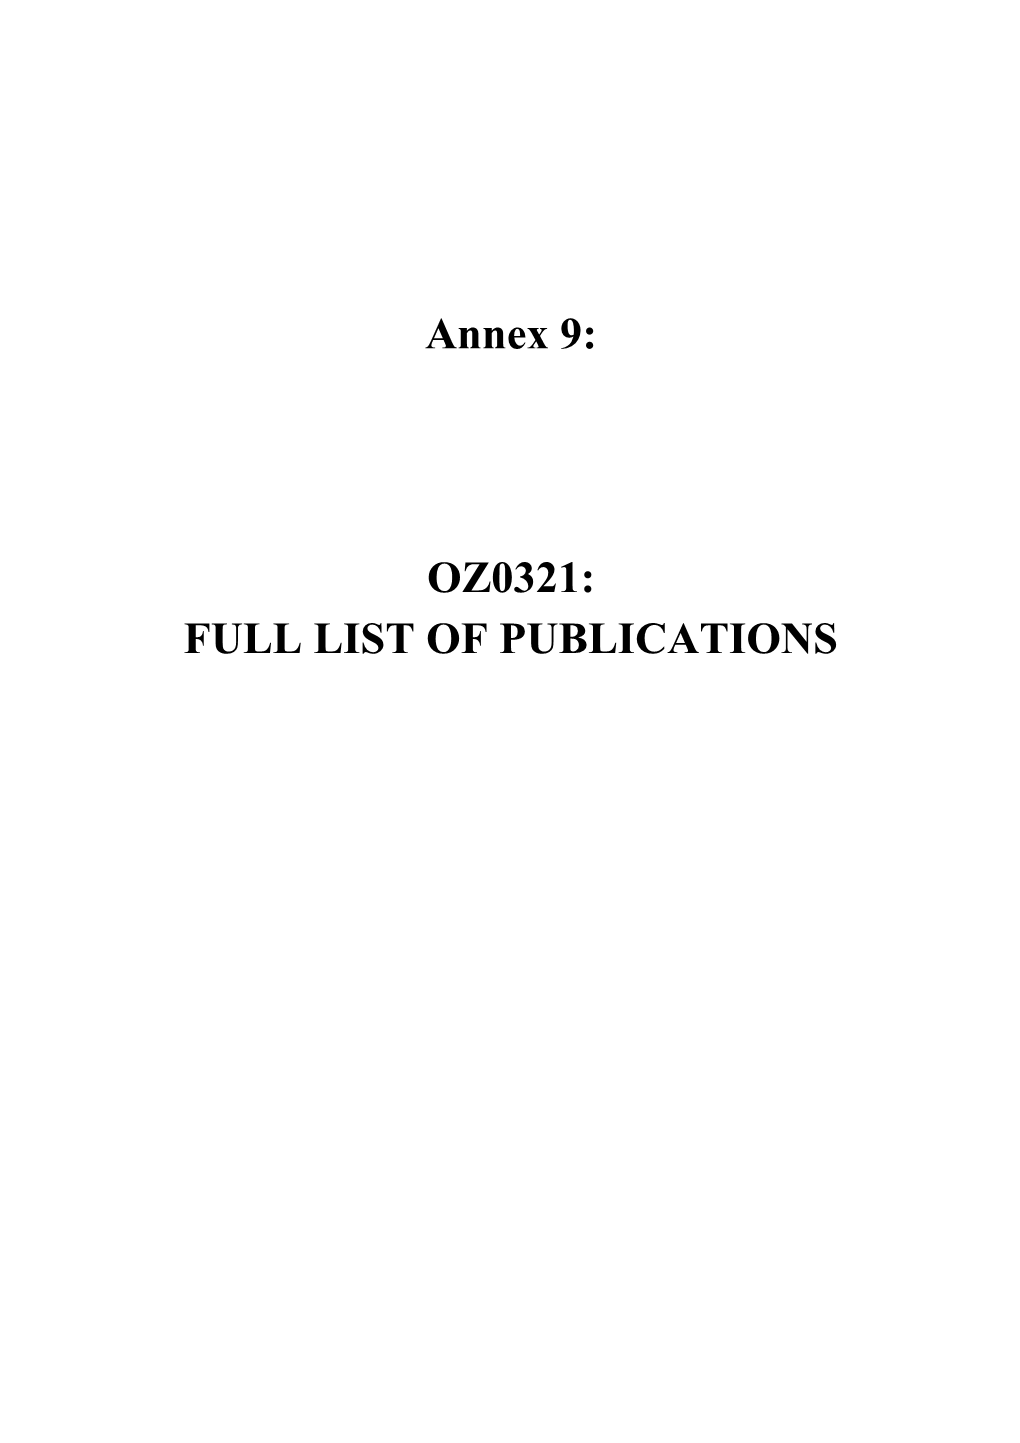 Full List of Publications